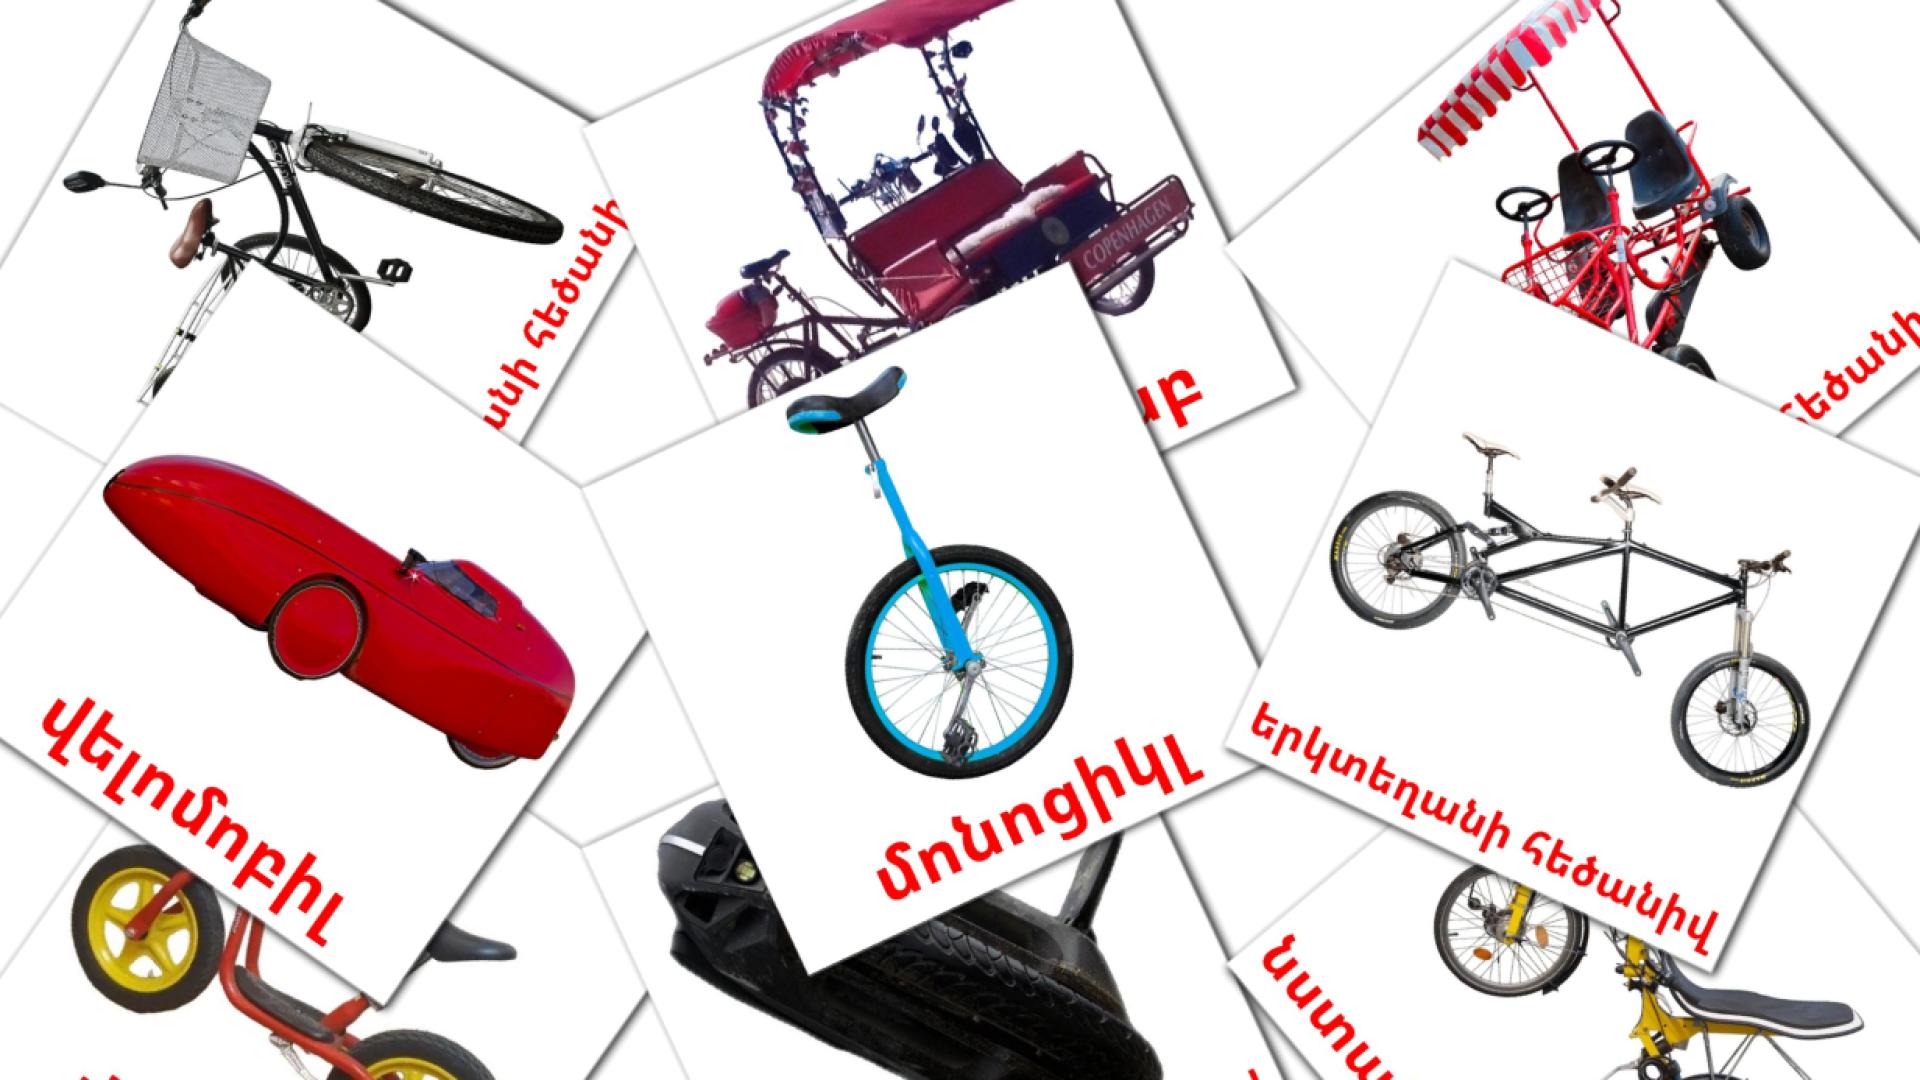 Bicycle transport - armenian vocabulary cards